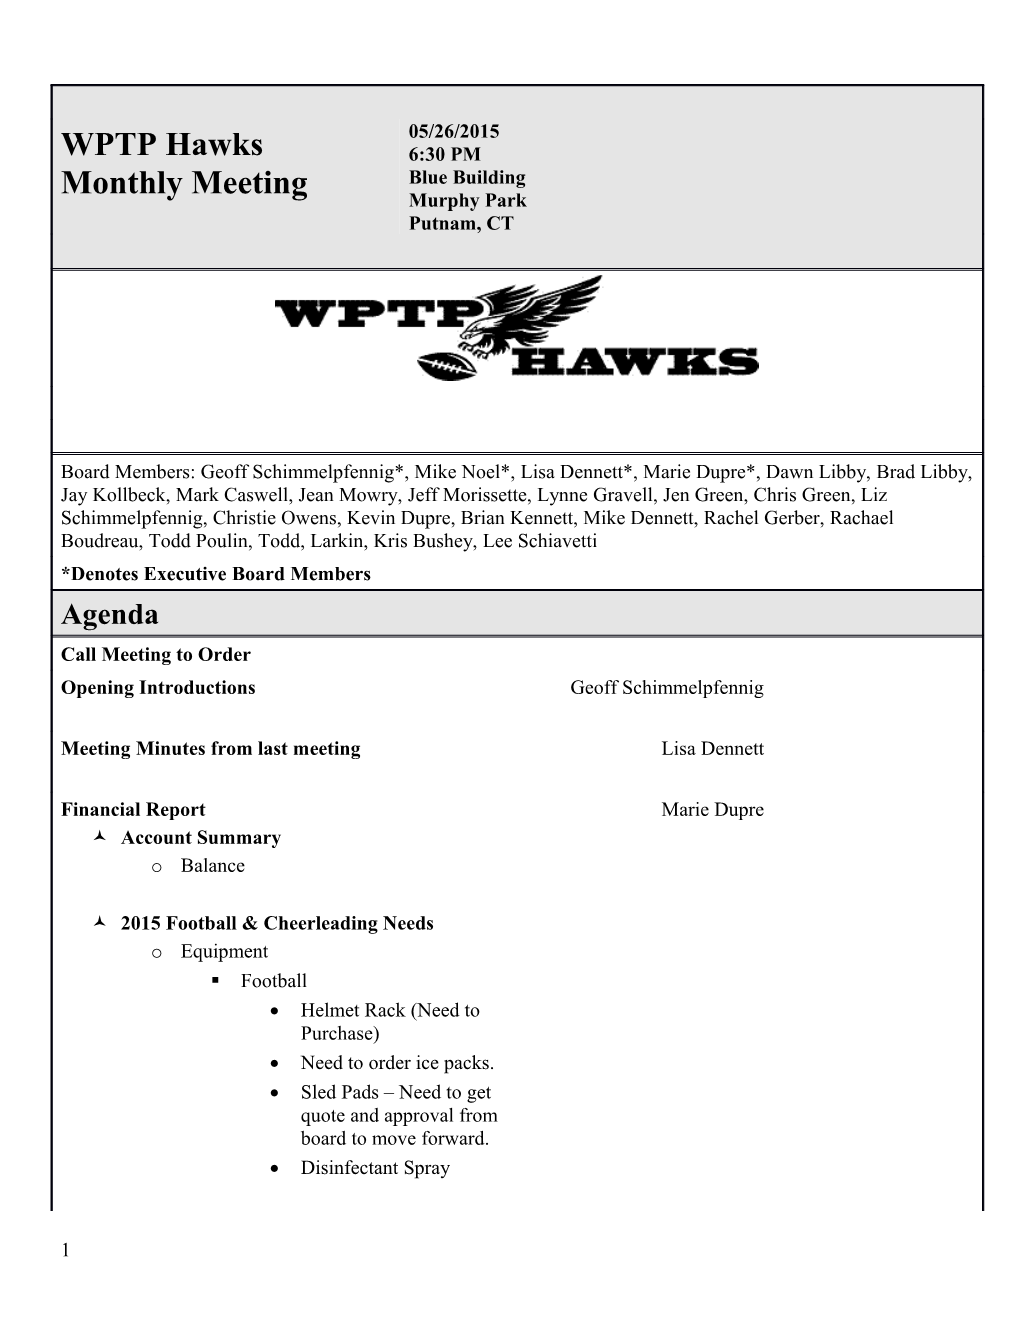 WPTP Hawks Monthly Meeting s1